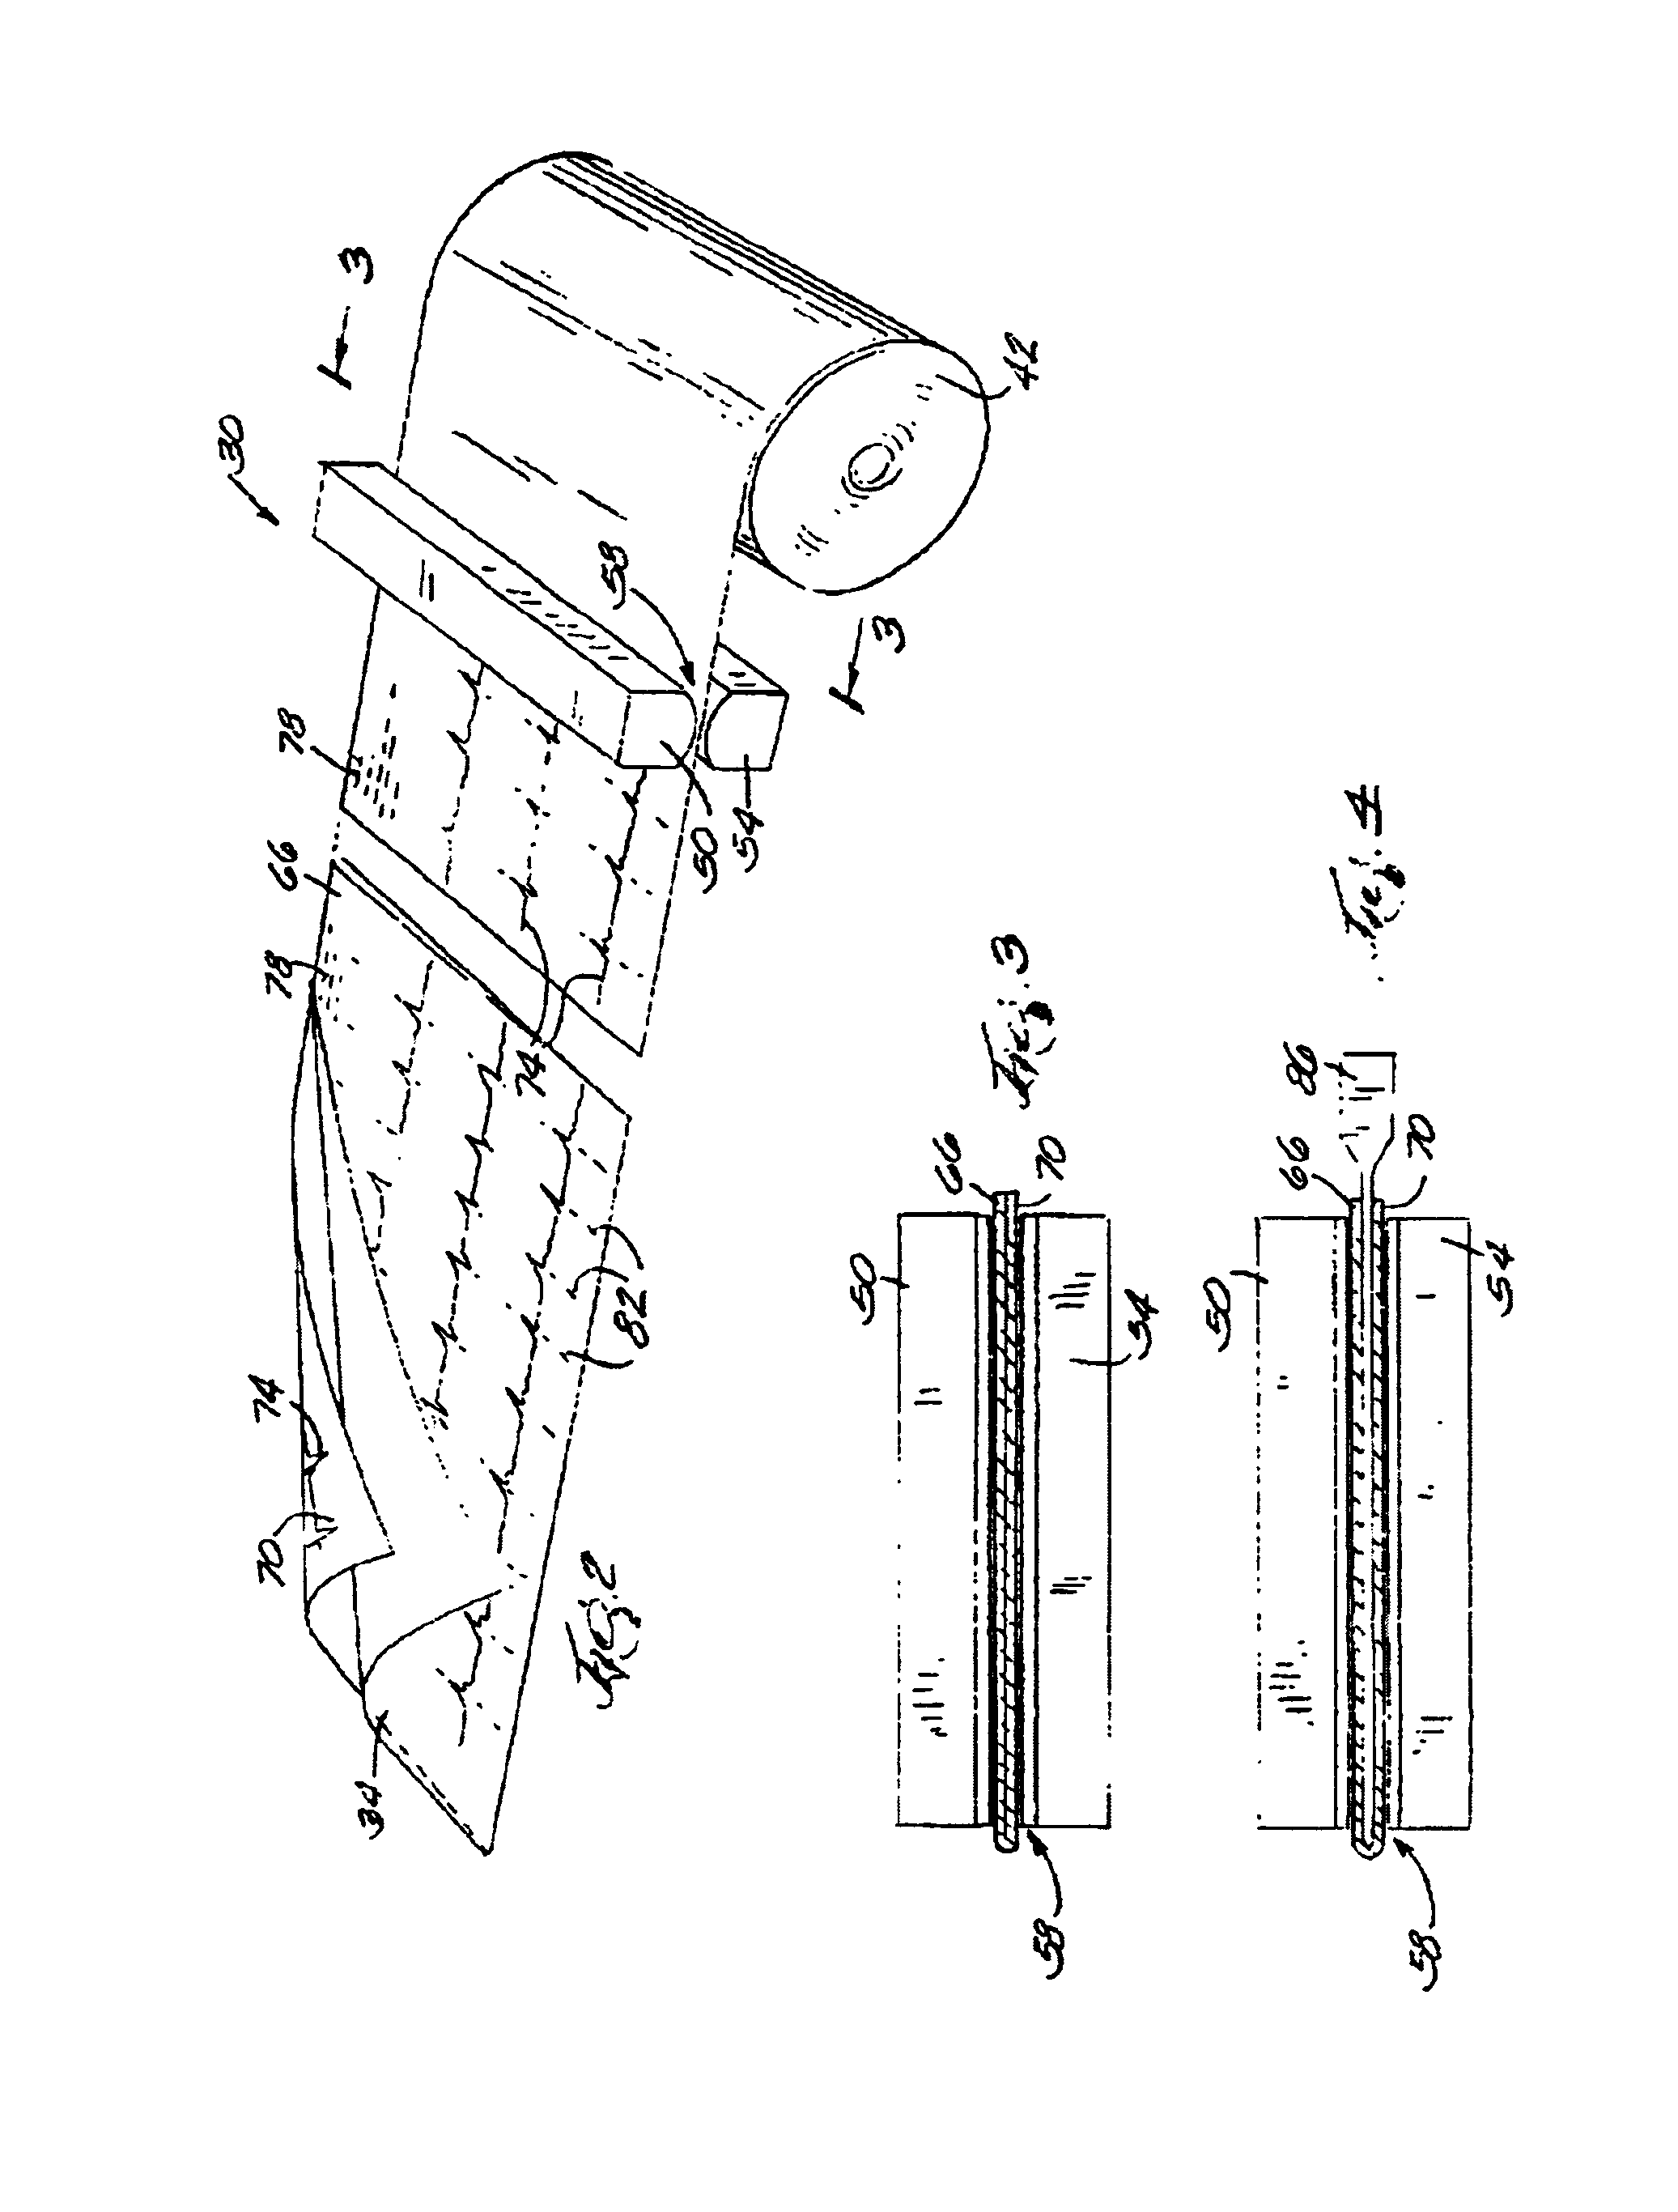 Printing method and apparatus